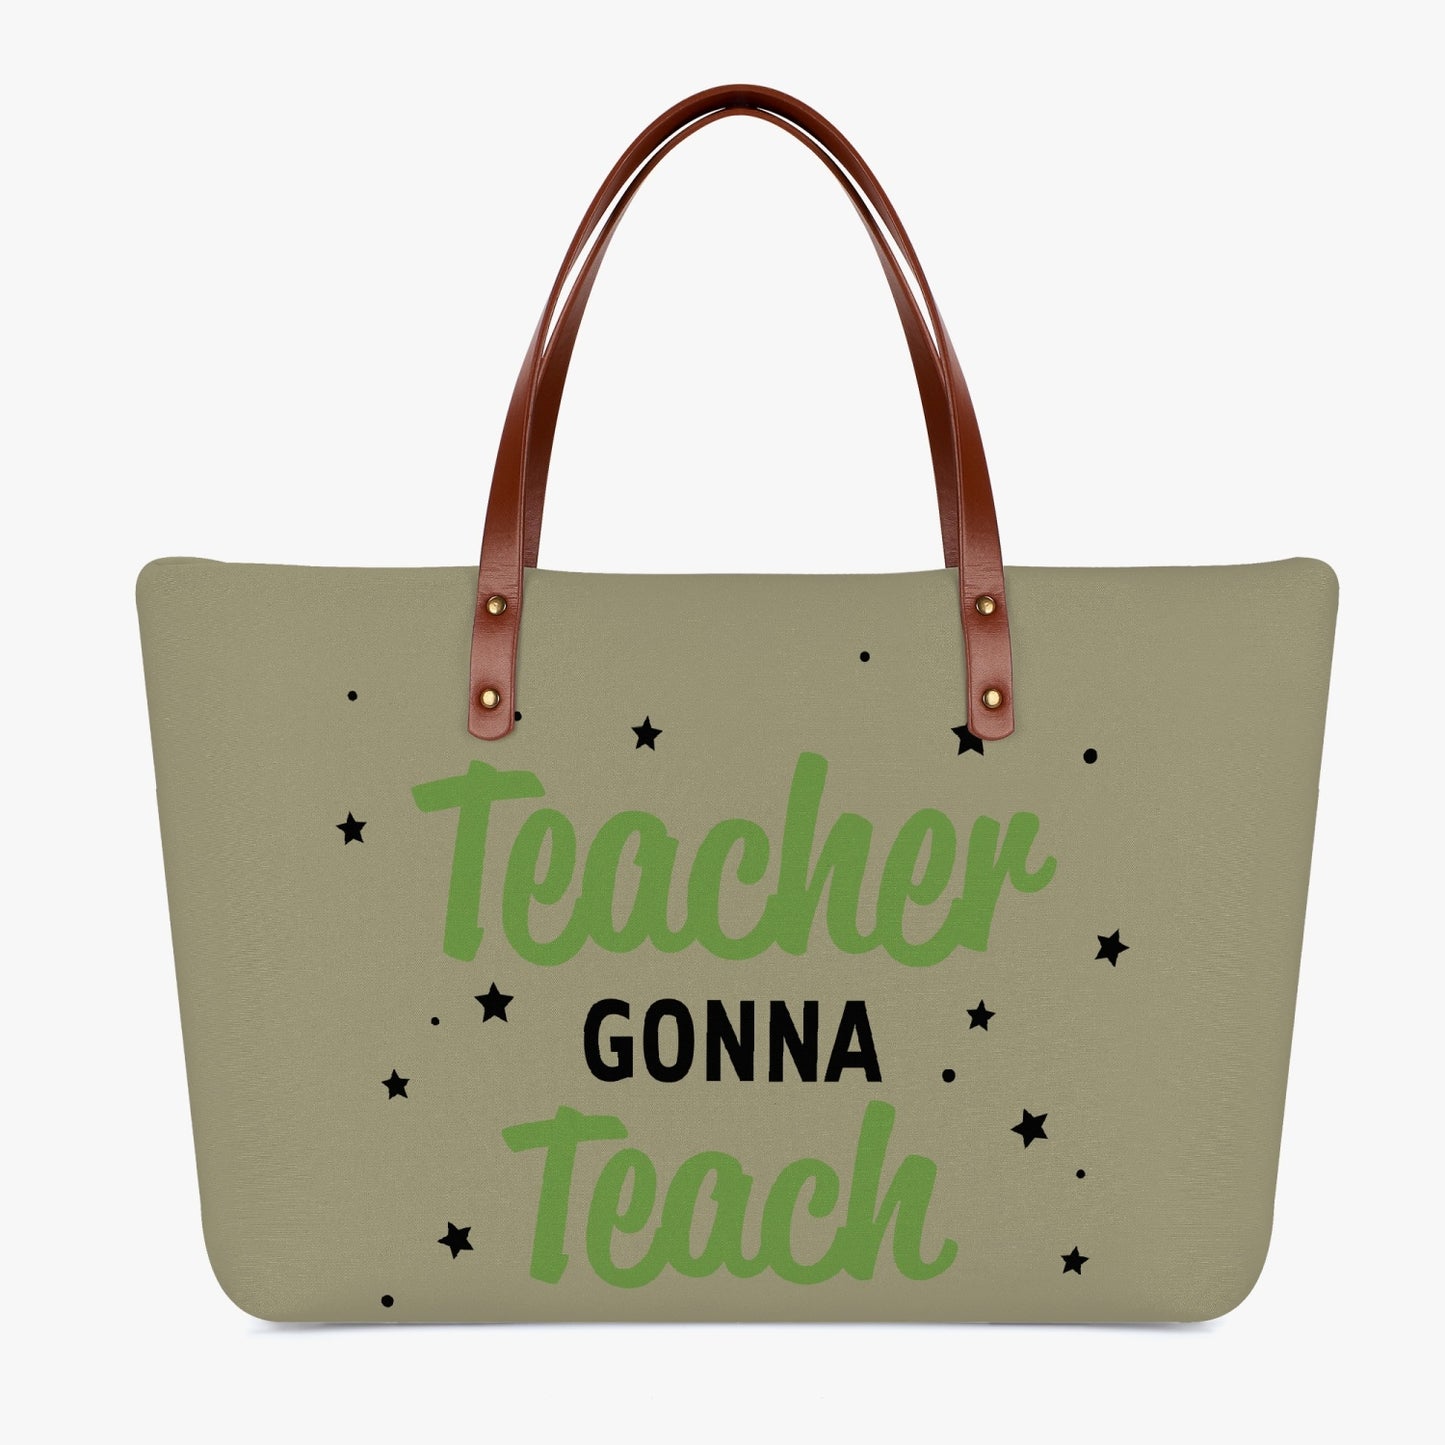 Teacher Gonna Teach Tote Bag